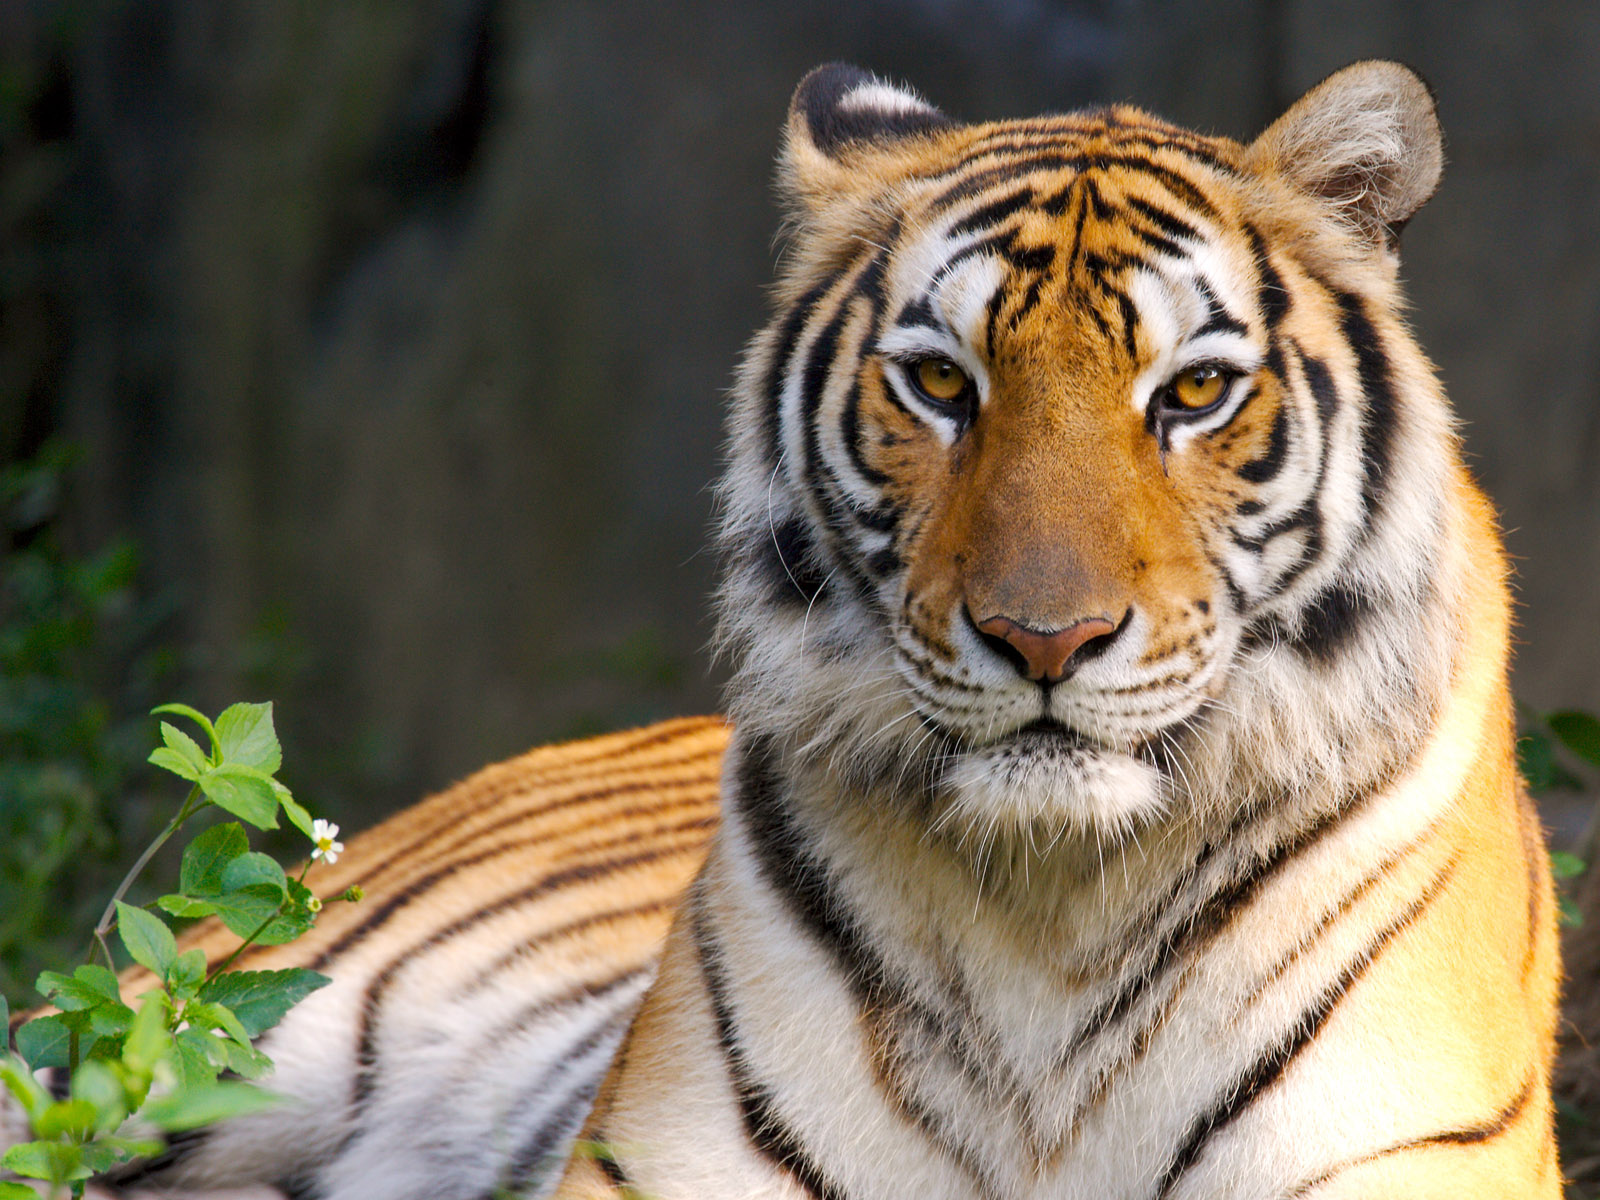 Beauty of Tiger31075708 - Beauty of Tiger - Tiger, Scuddle, Beauty